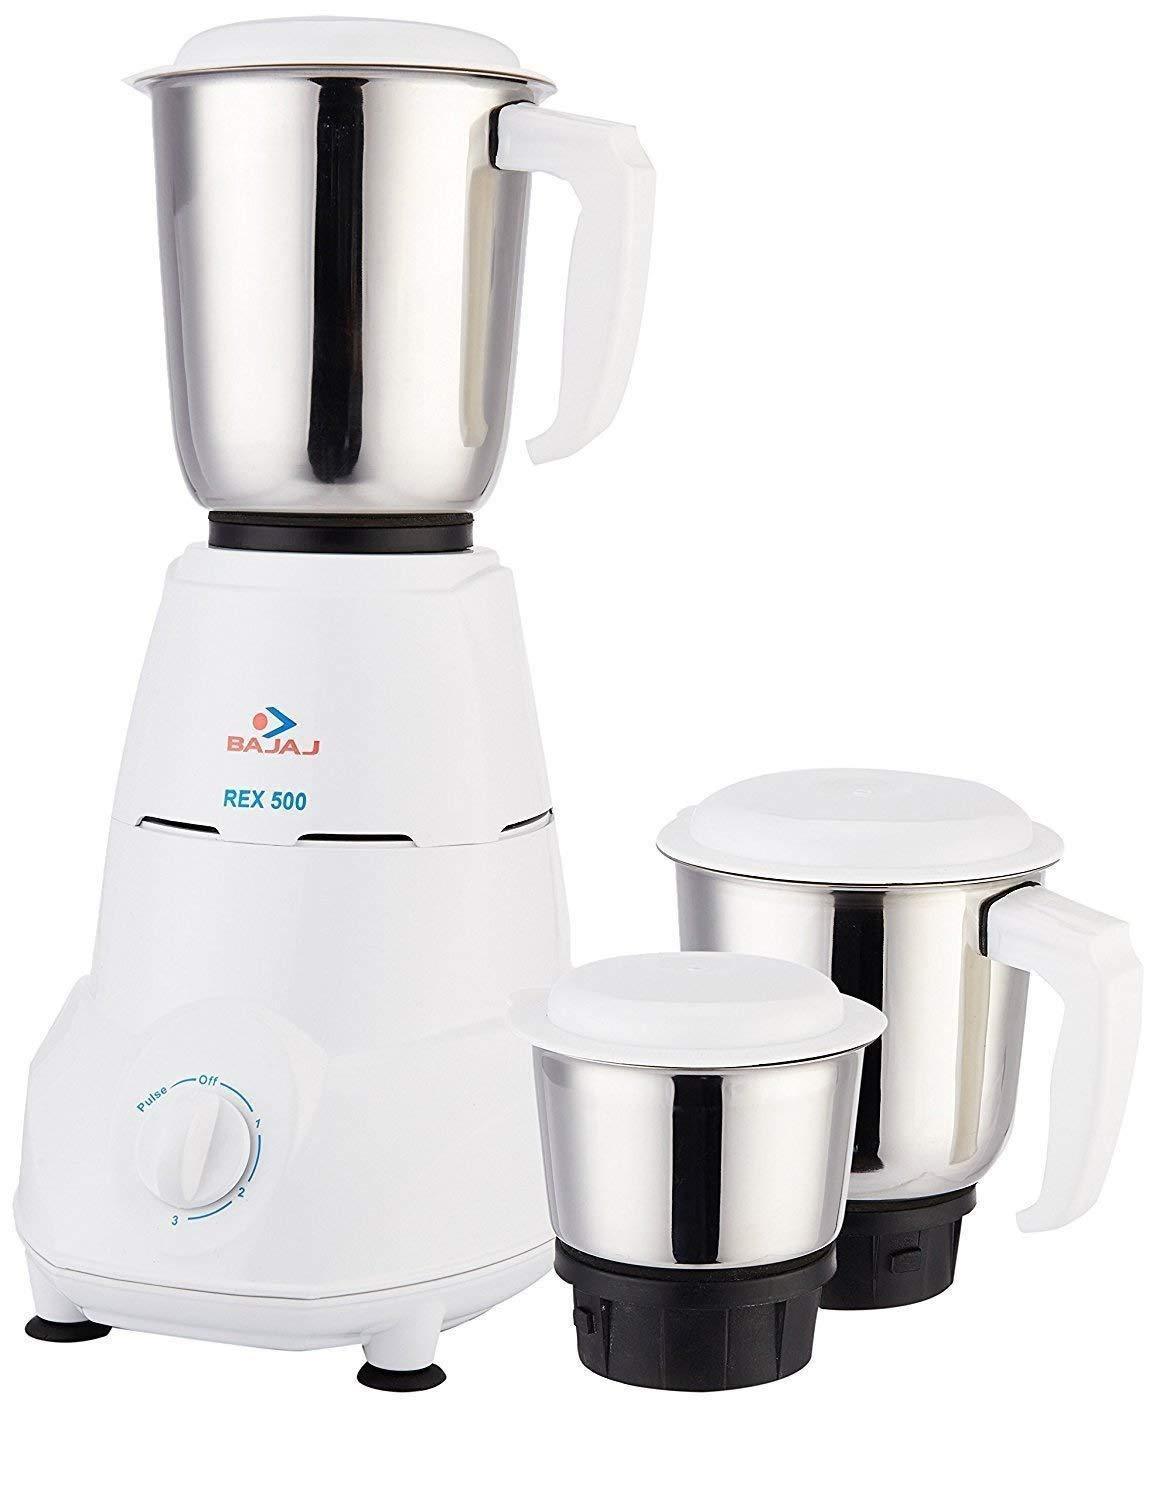 BAJAJ REX 500W MIXER GRINDER-Home & Kitchen Appliances-dealsplant